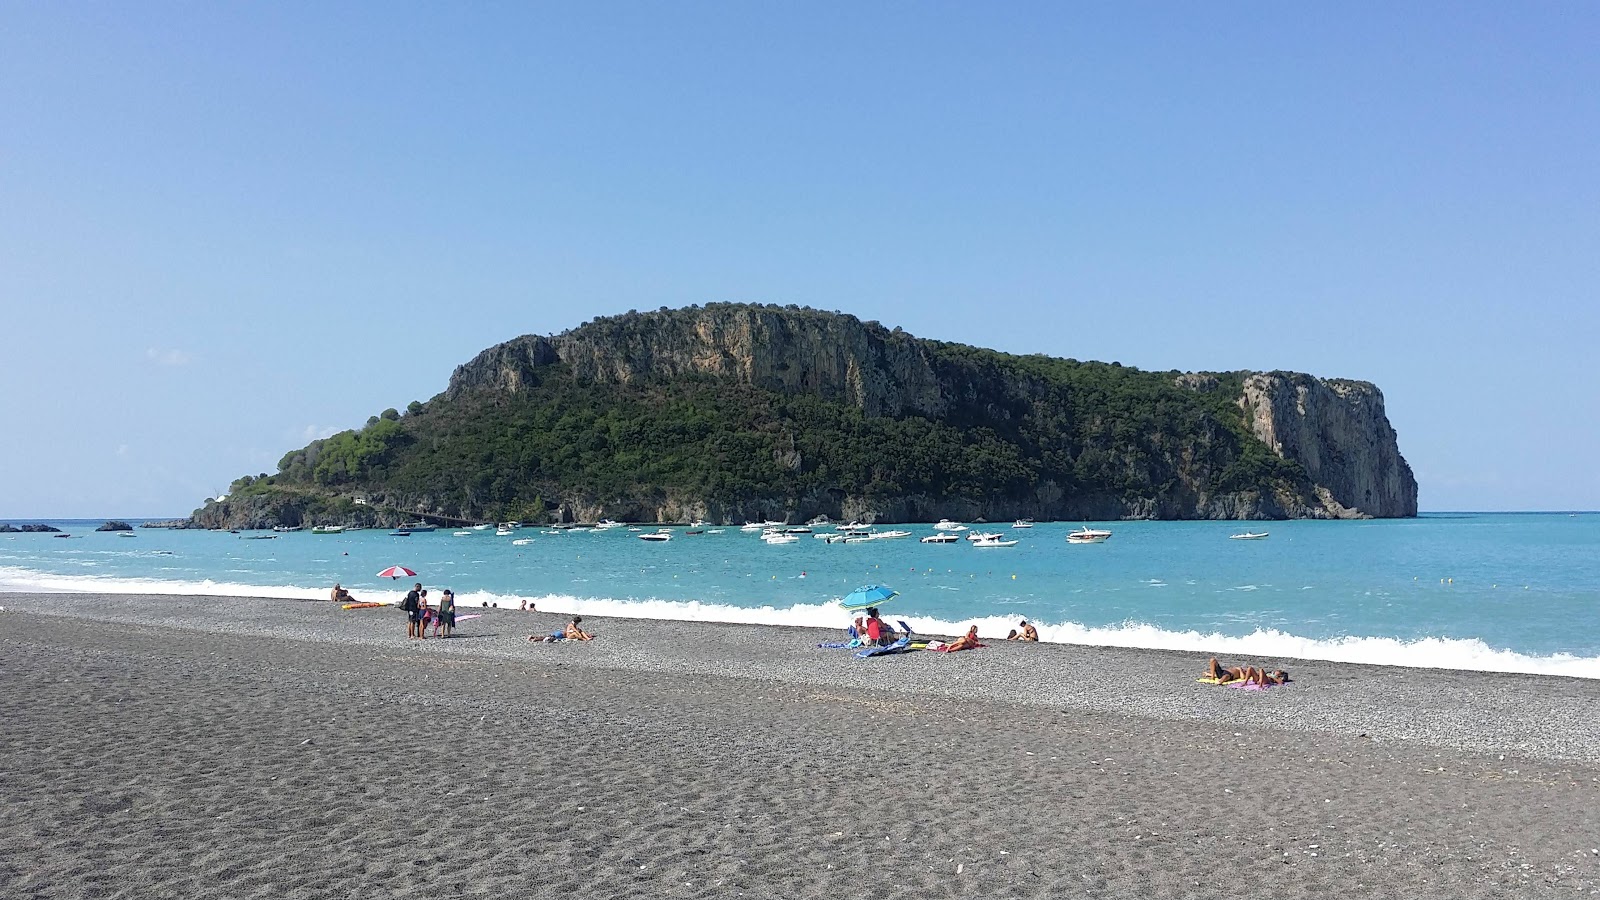 Fotografija Spiaggia Praia a Mare z sivi fini kamenček površino